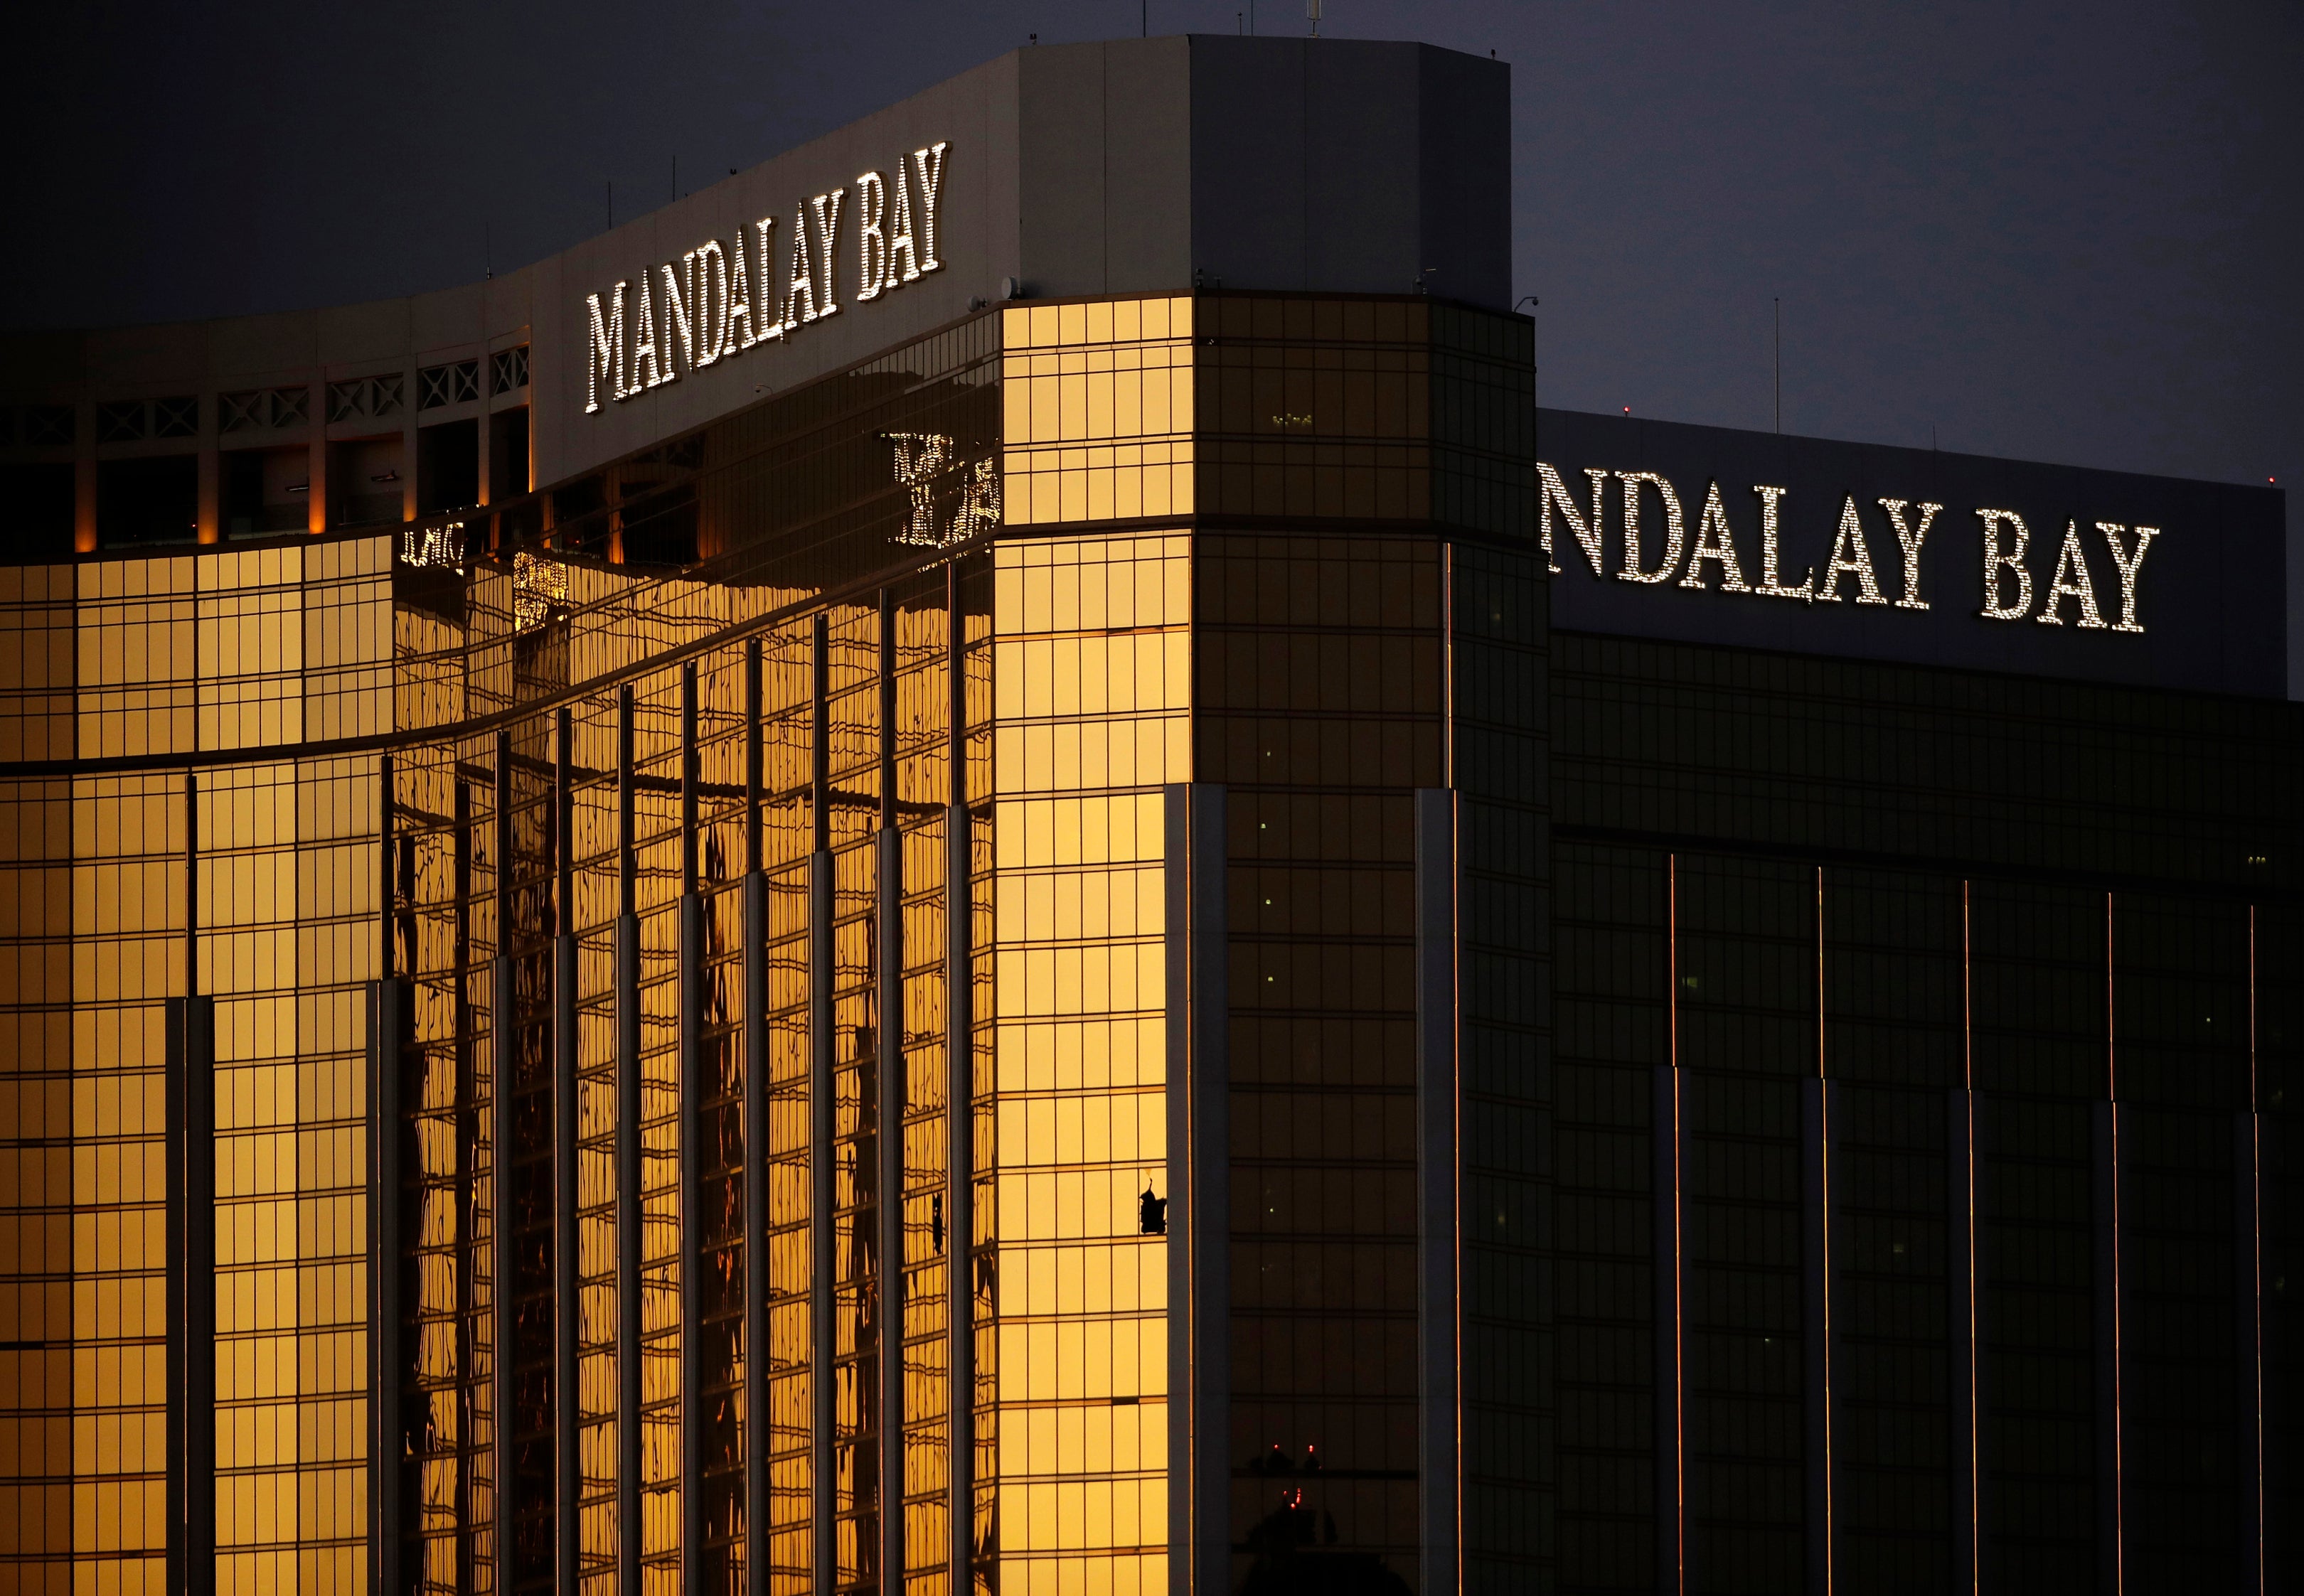 The Mandalay Bay Hotel on the Las Vegas Strip, scene of Stephen Paddock’s horrific mass shooting on 1 October 2017